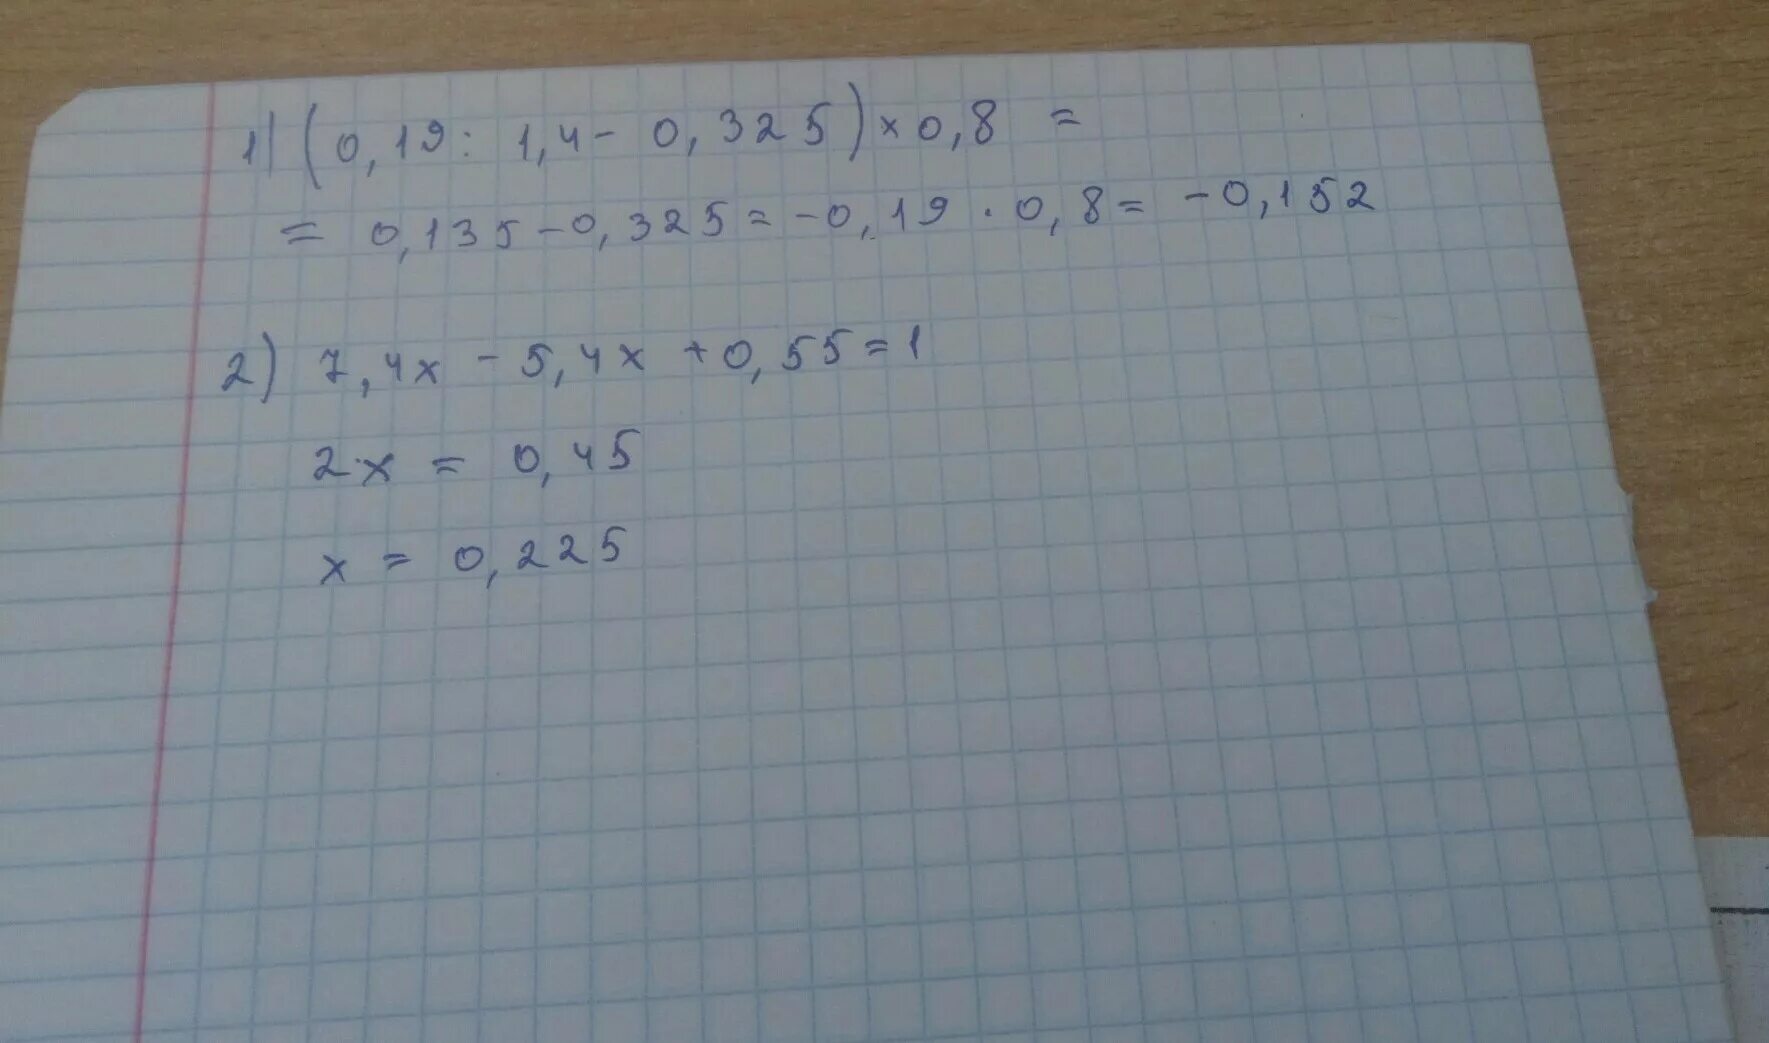 Решение 1 5х 1. 7,2х-5,4х+0,55=1. 7,2х•5, 4х+0, 55=1 решение. 7 2x 5 4x +0.55 равно 1 решение. 1,1х+0,7х+0,55=1.